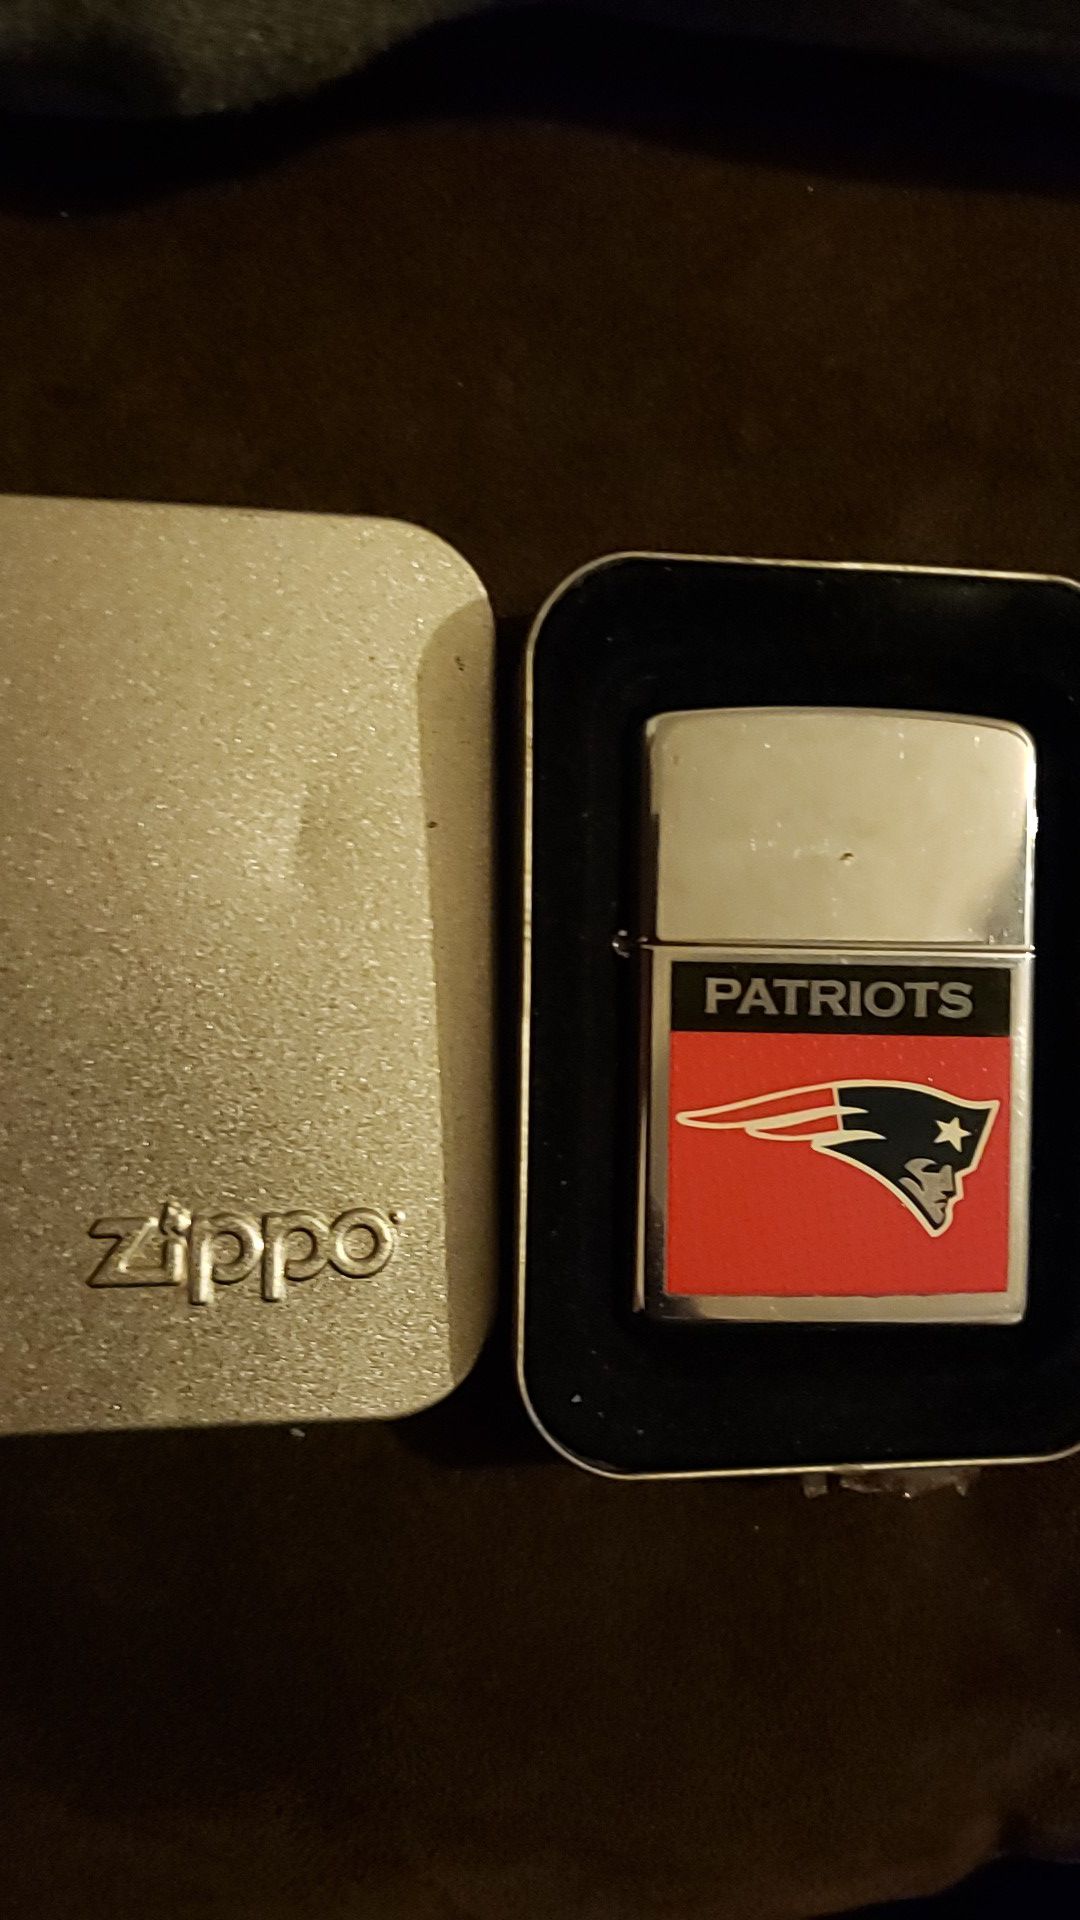 Zippo NFL Patriots lighter